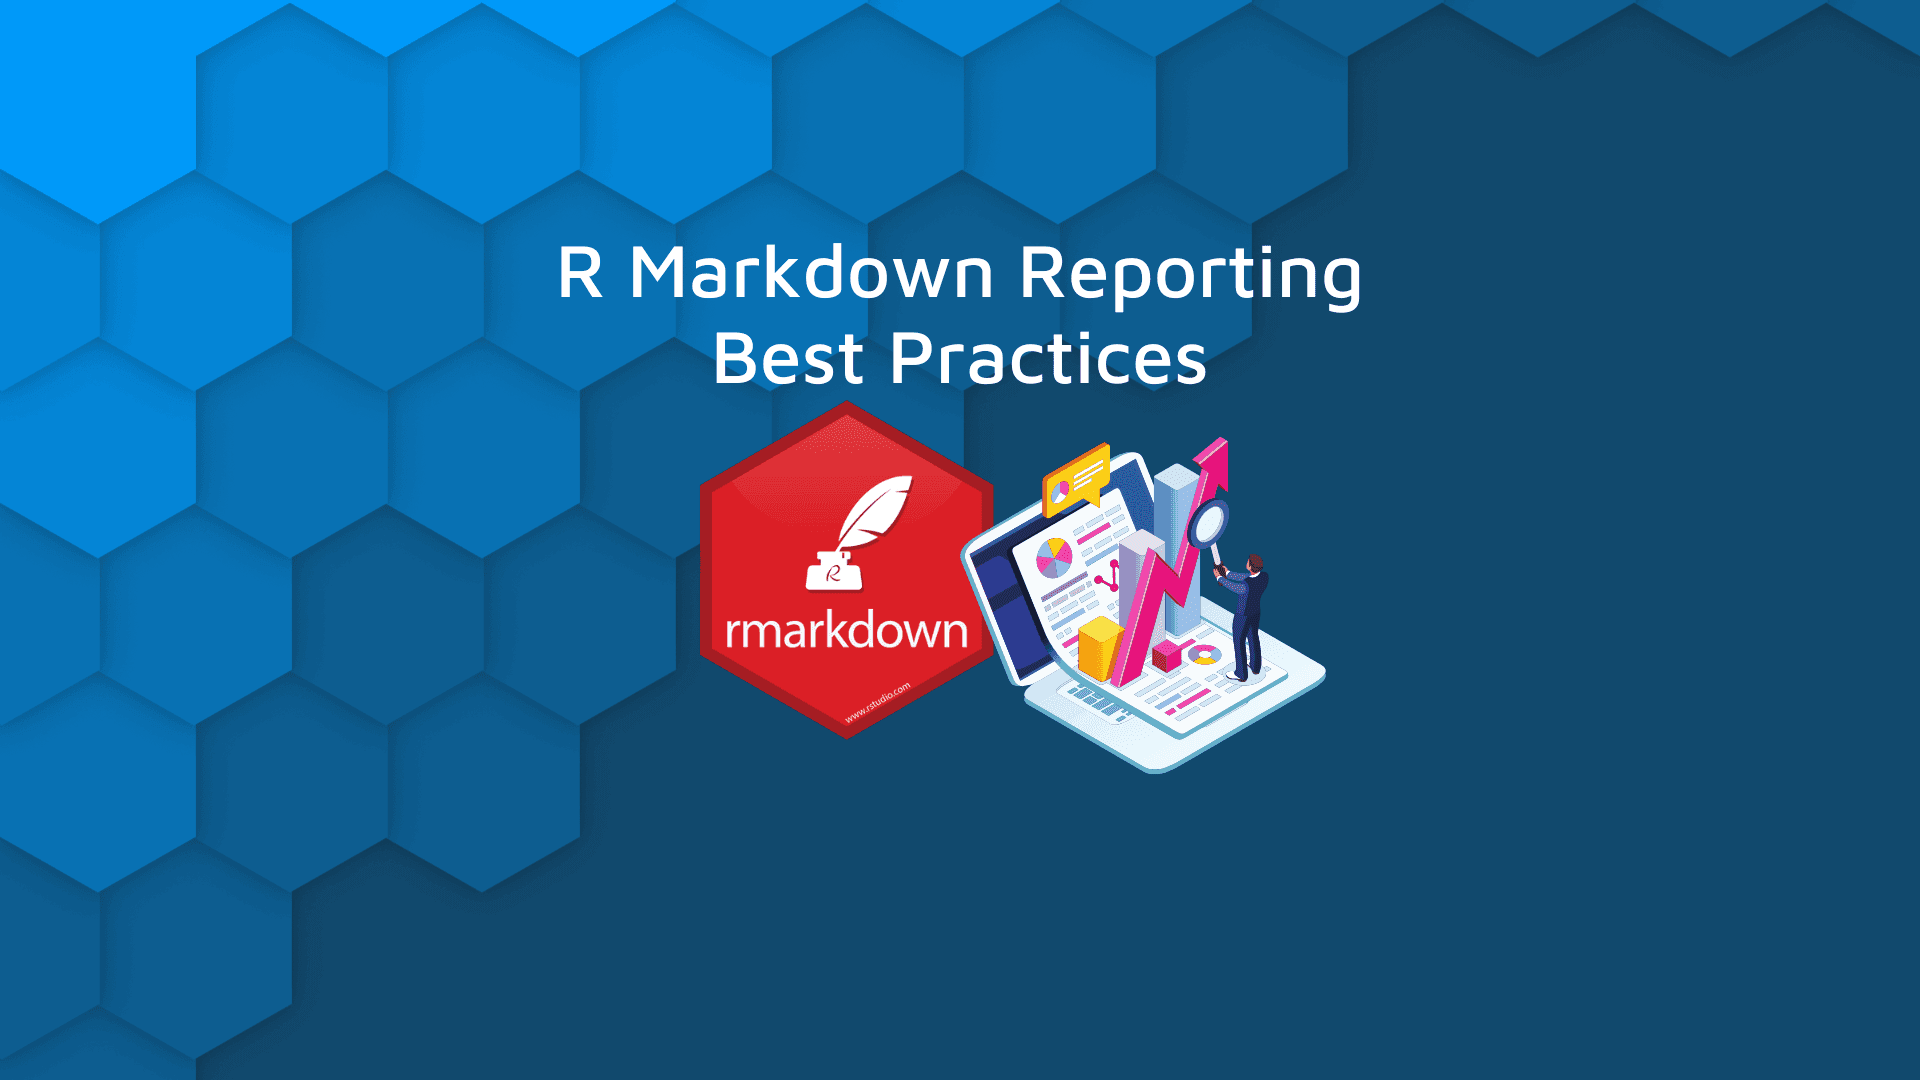 R Markdown reporting best practices 2022 blog hero hex banner